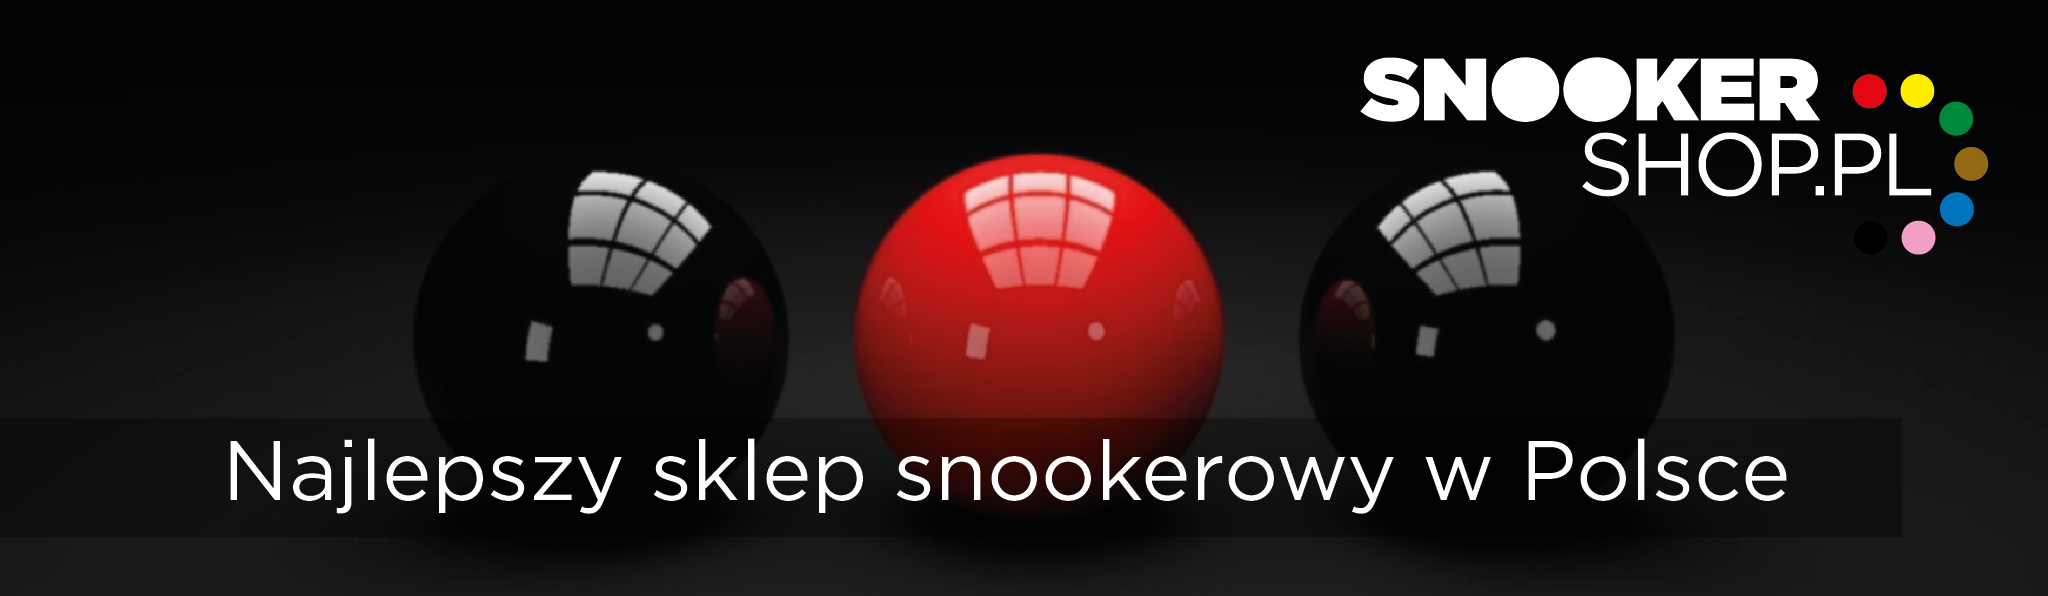 Snooker Shop – Najlepszy polski sklep snookerowy